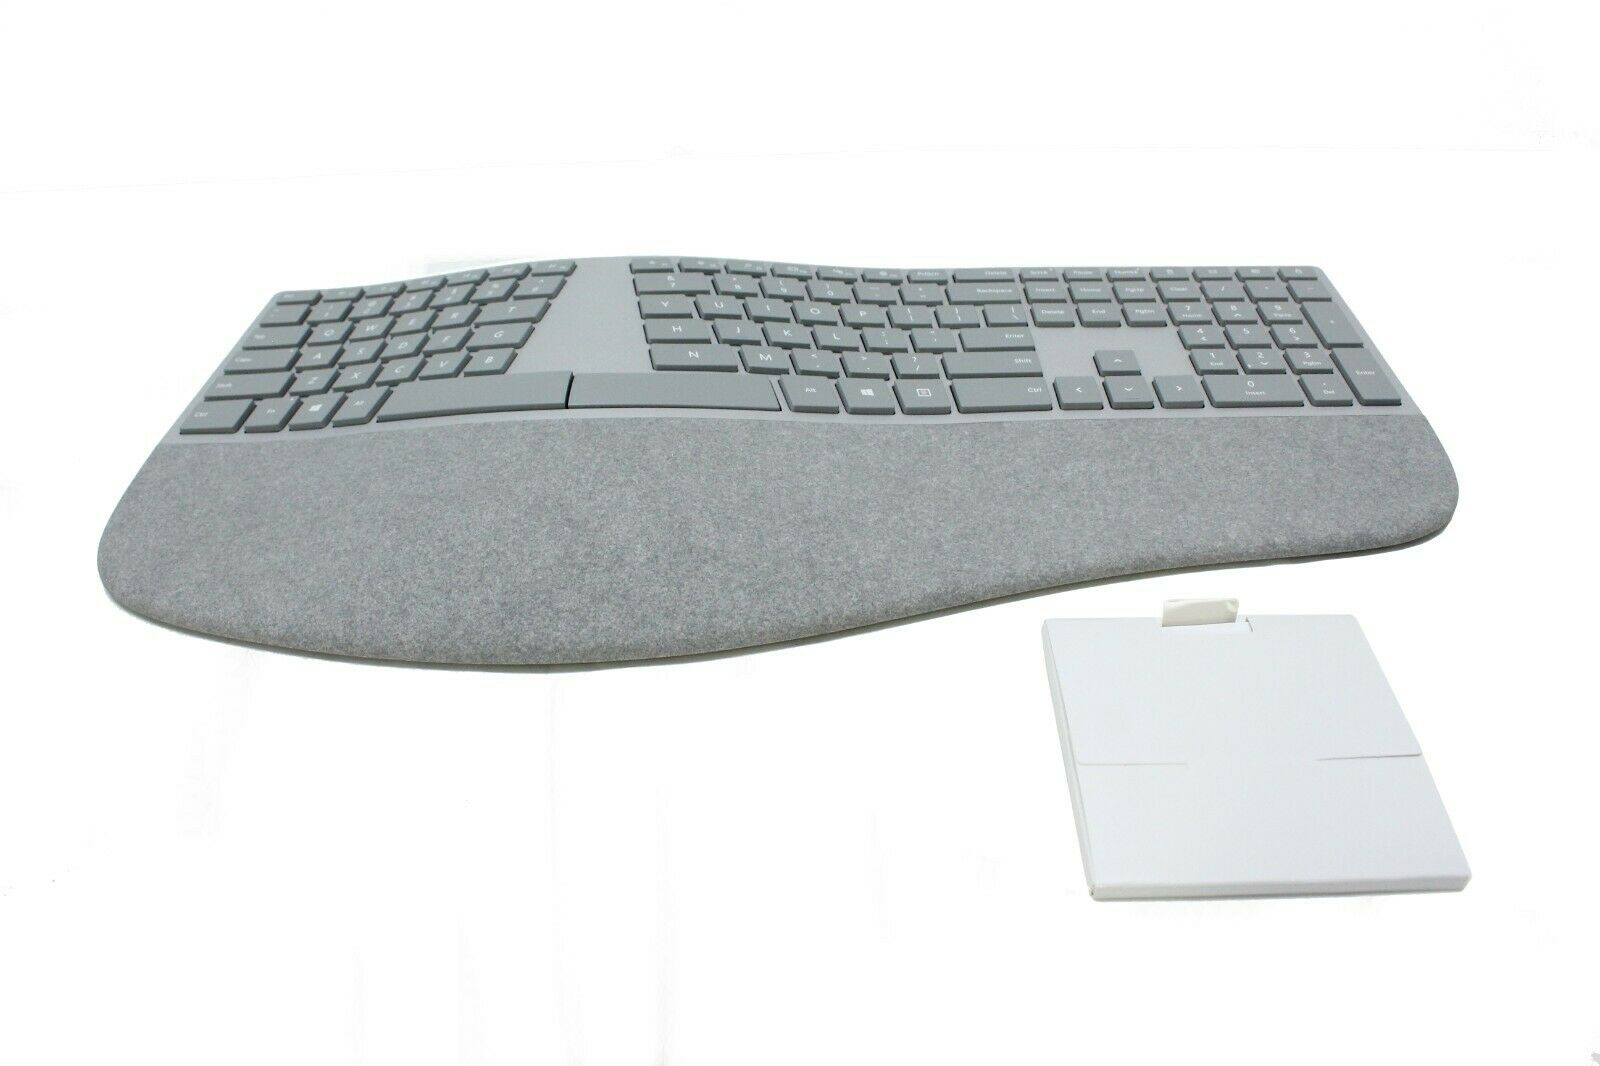 Microsoft Surface Ergonomic Keyboard English North America 3SQ-00008